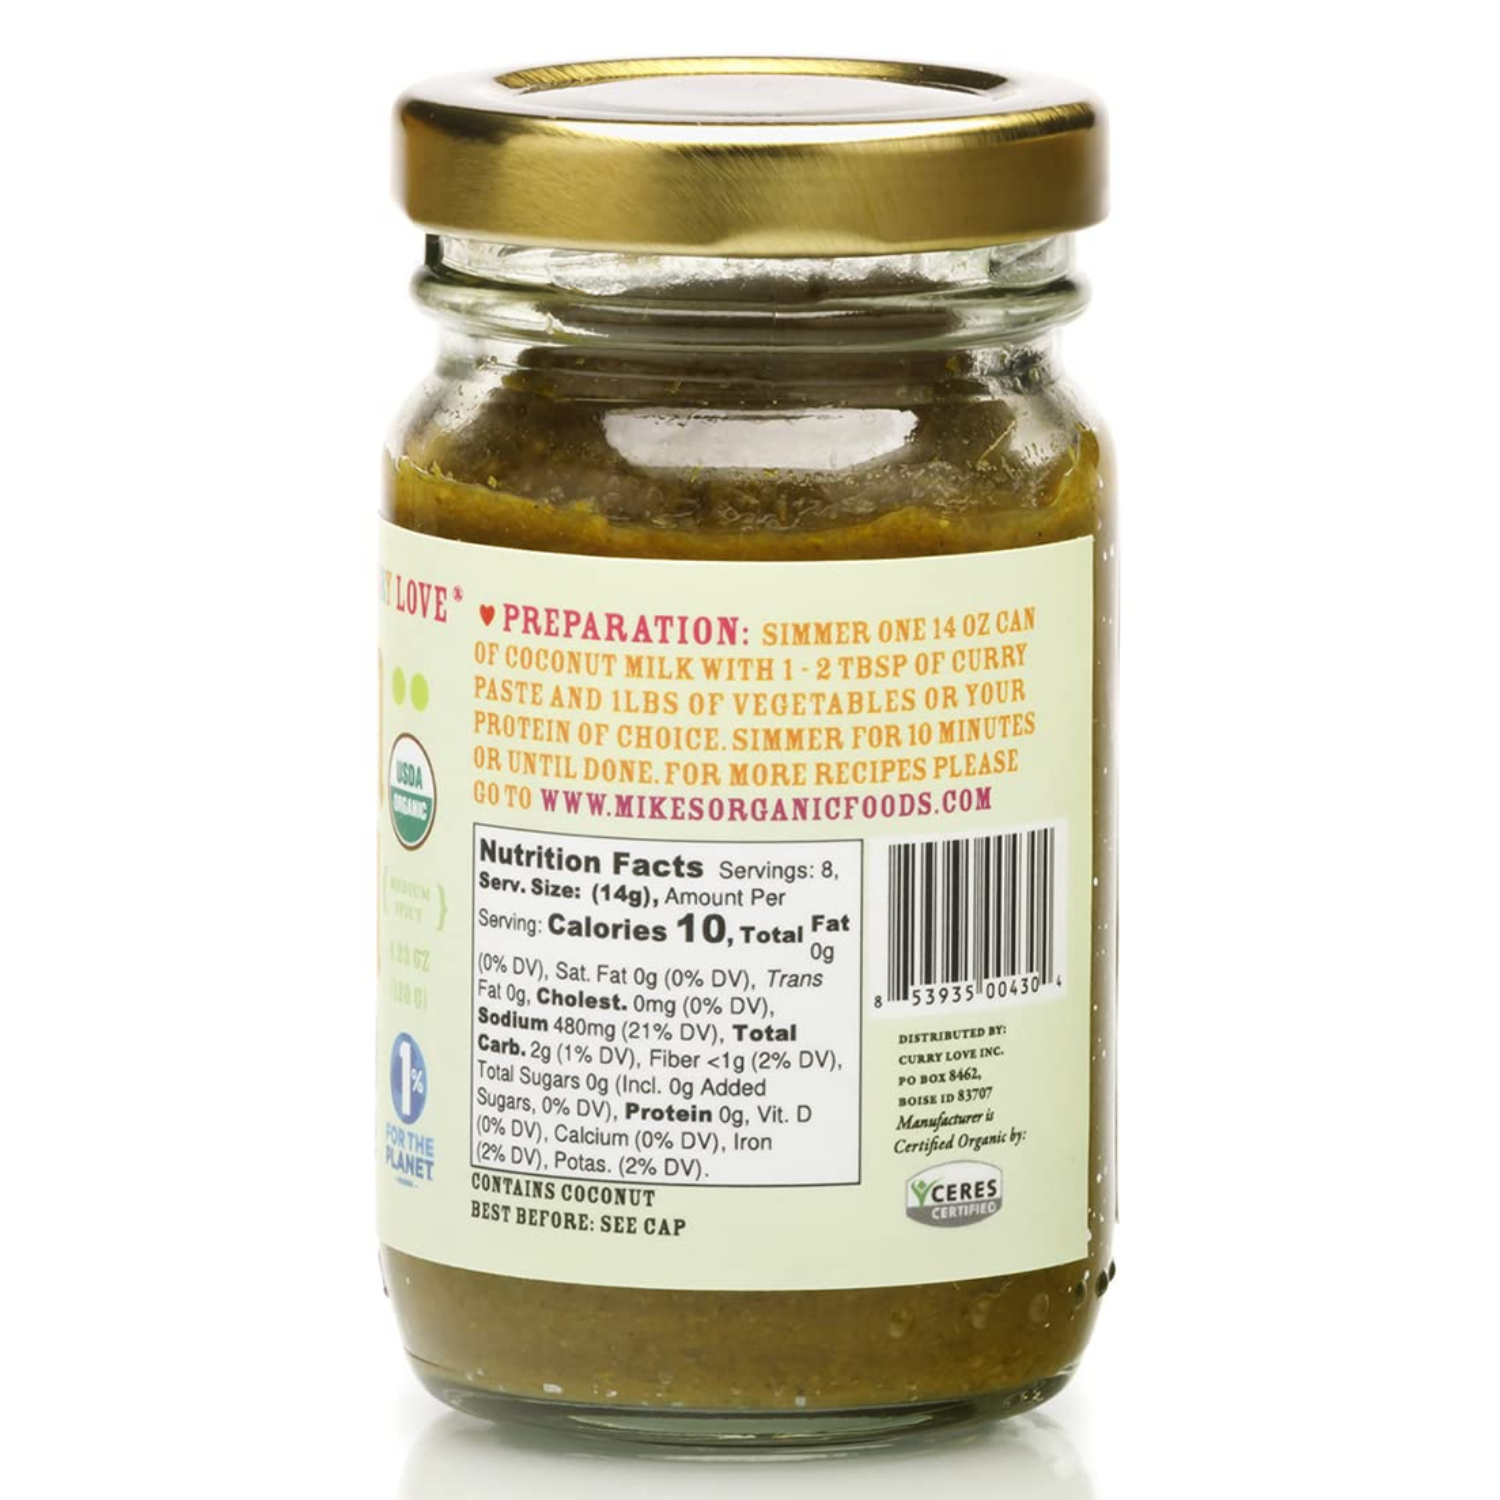 Green Thai Curry Paste - 4.23 oz Glass Jar